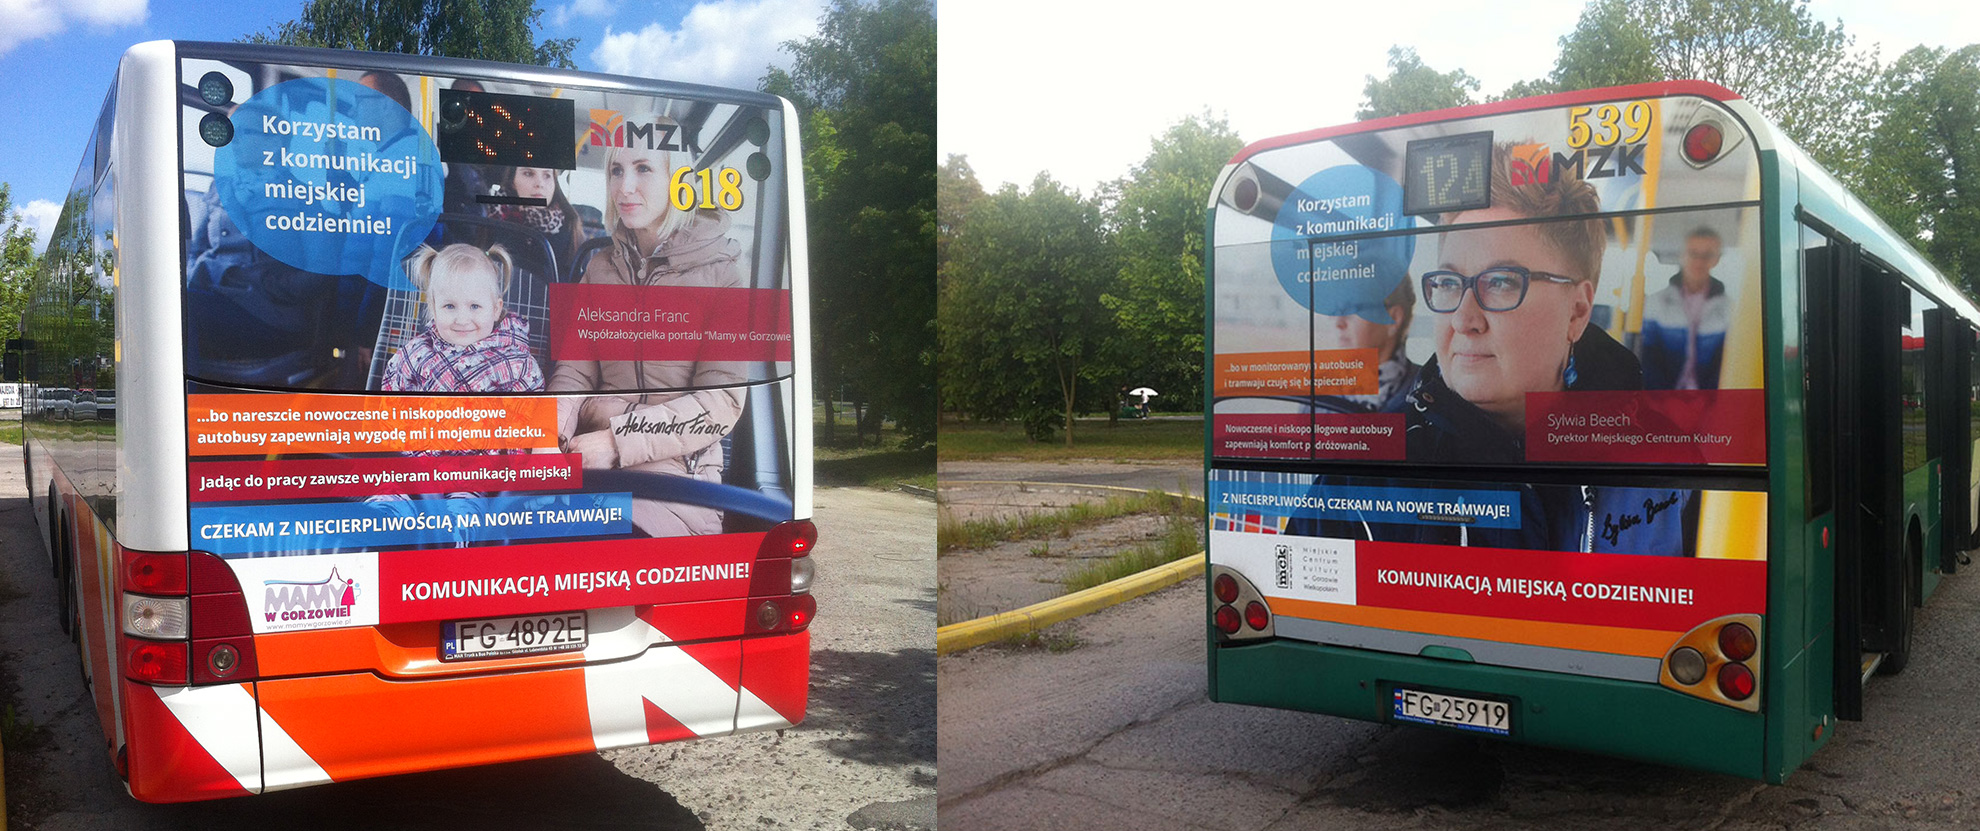 reklama na pojadach autobus mzk - endure agency